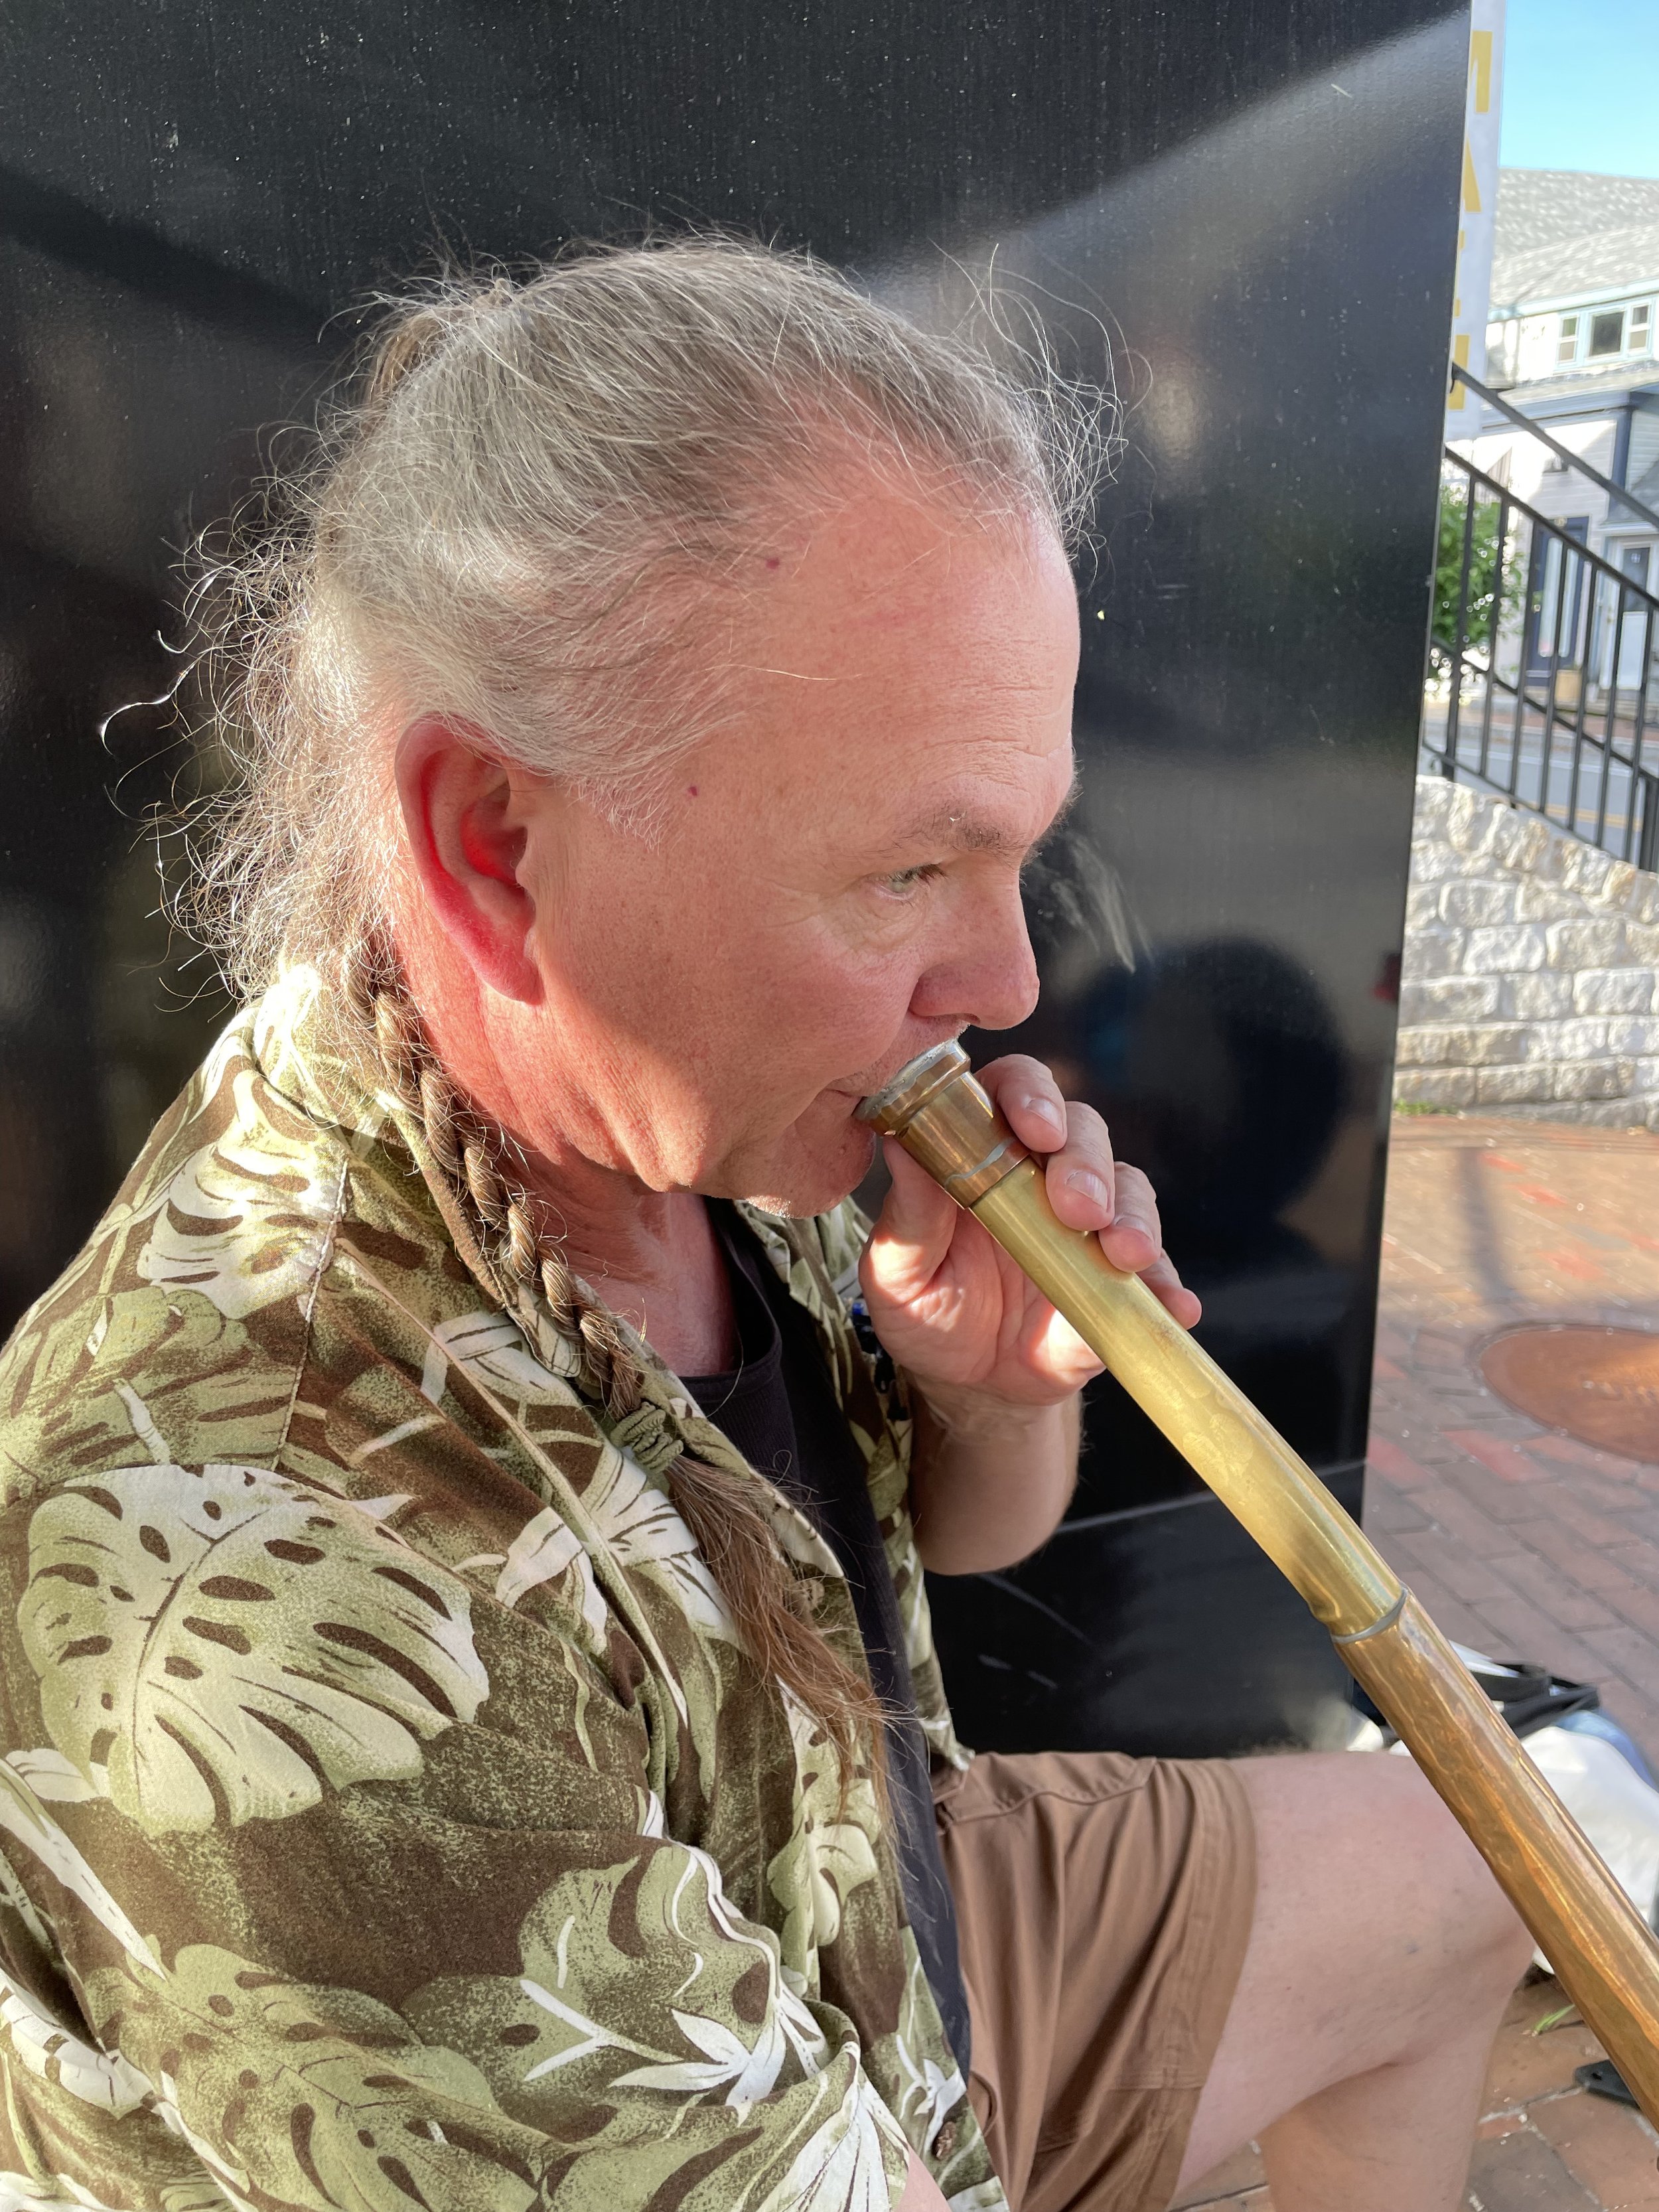 Forest Weston plays didgeridoo.